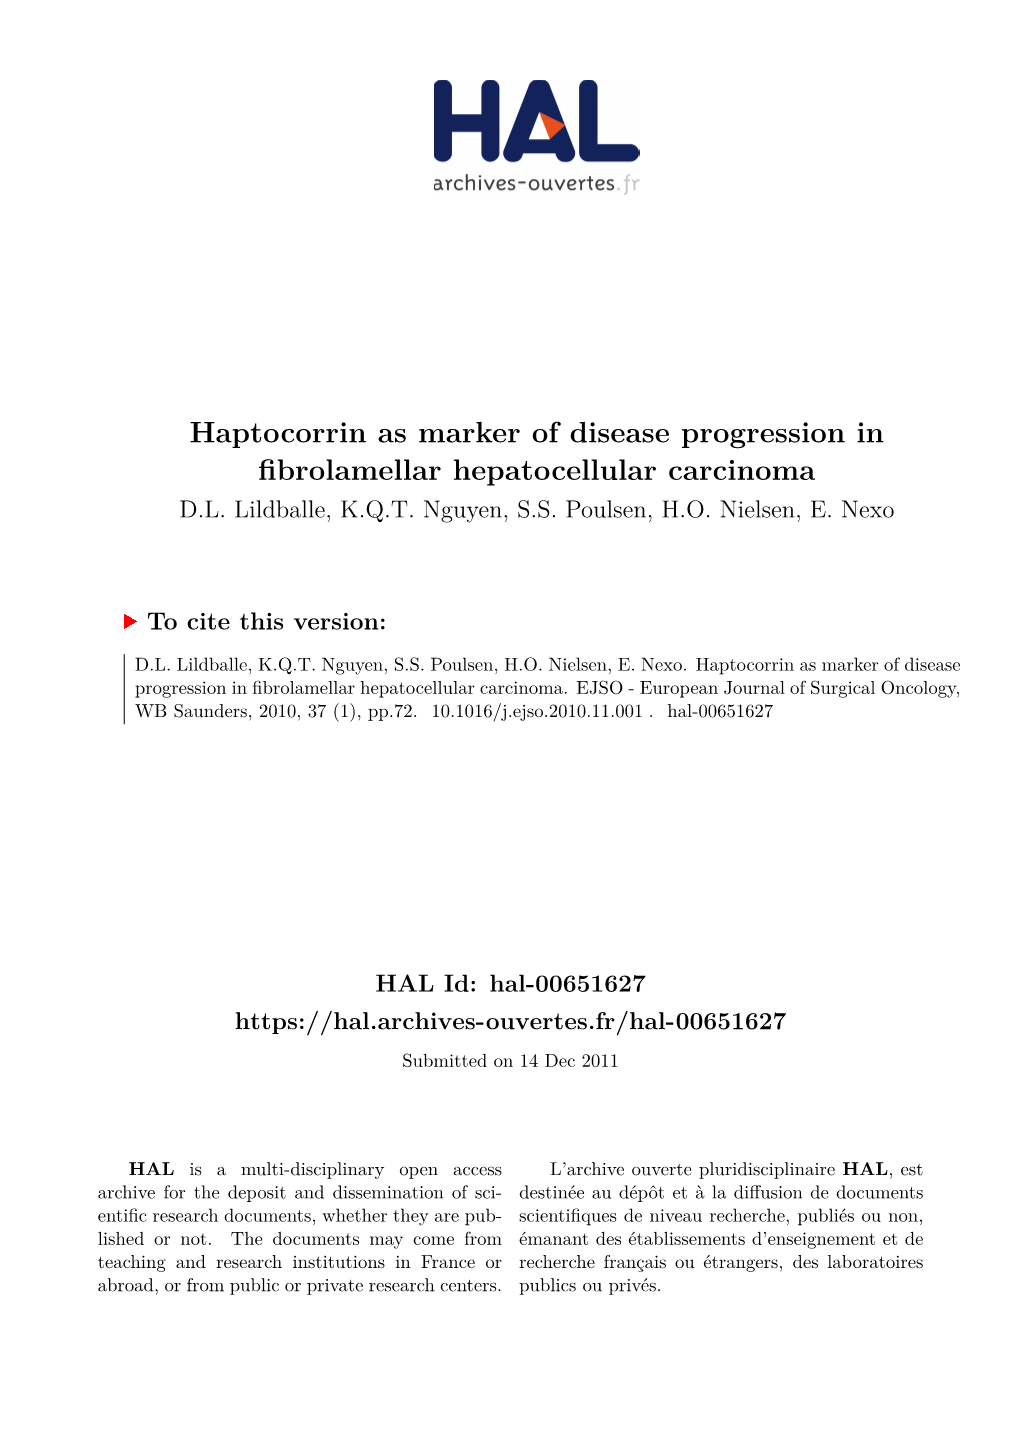 Haptocorrin As Marker of Disease Progression in Fibrolamellar Hepatocellular Carcinoma D.L